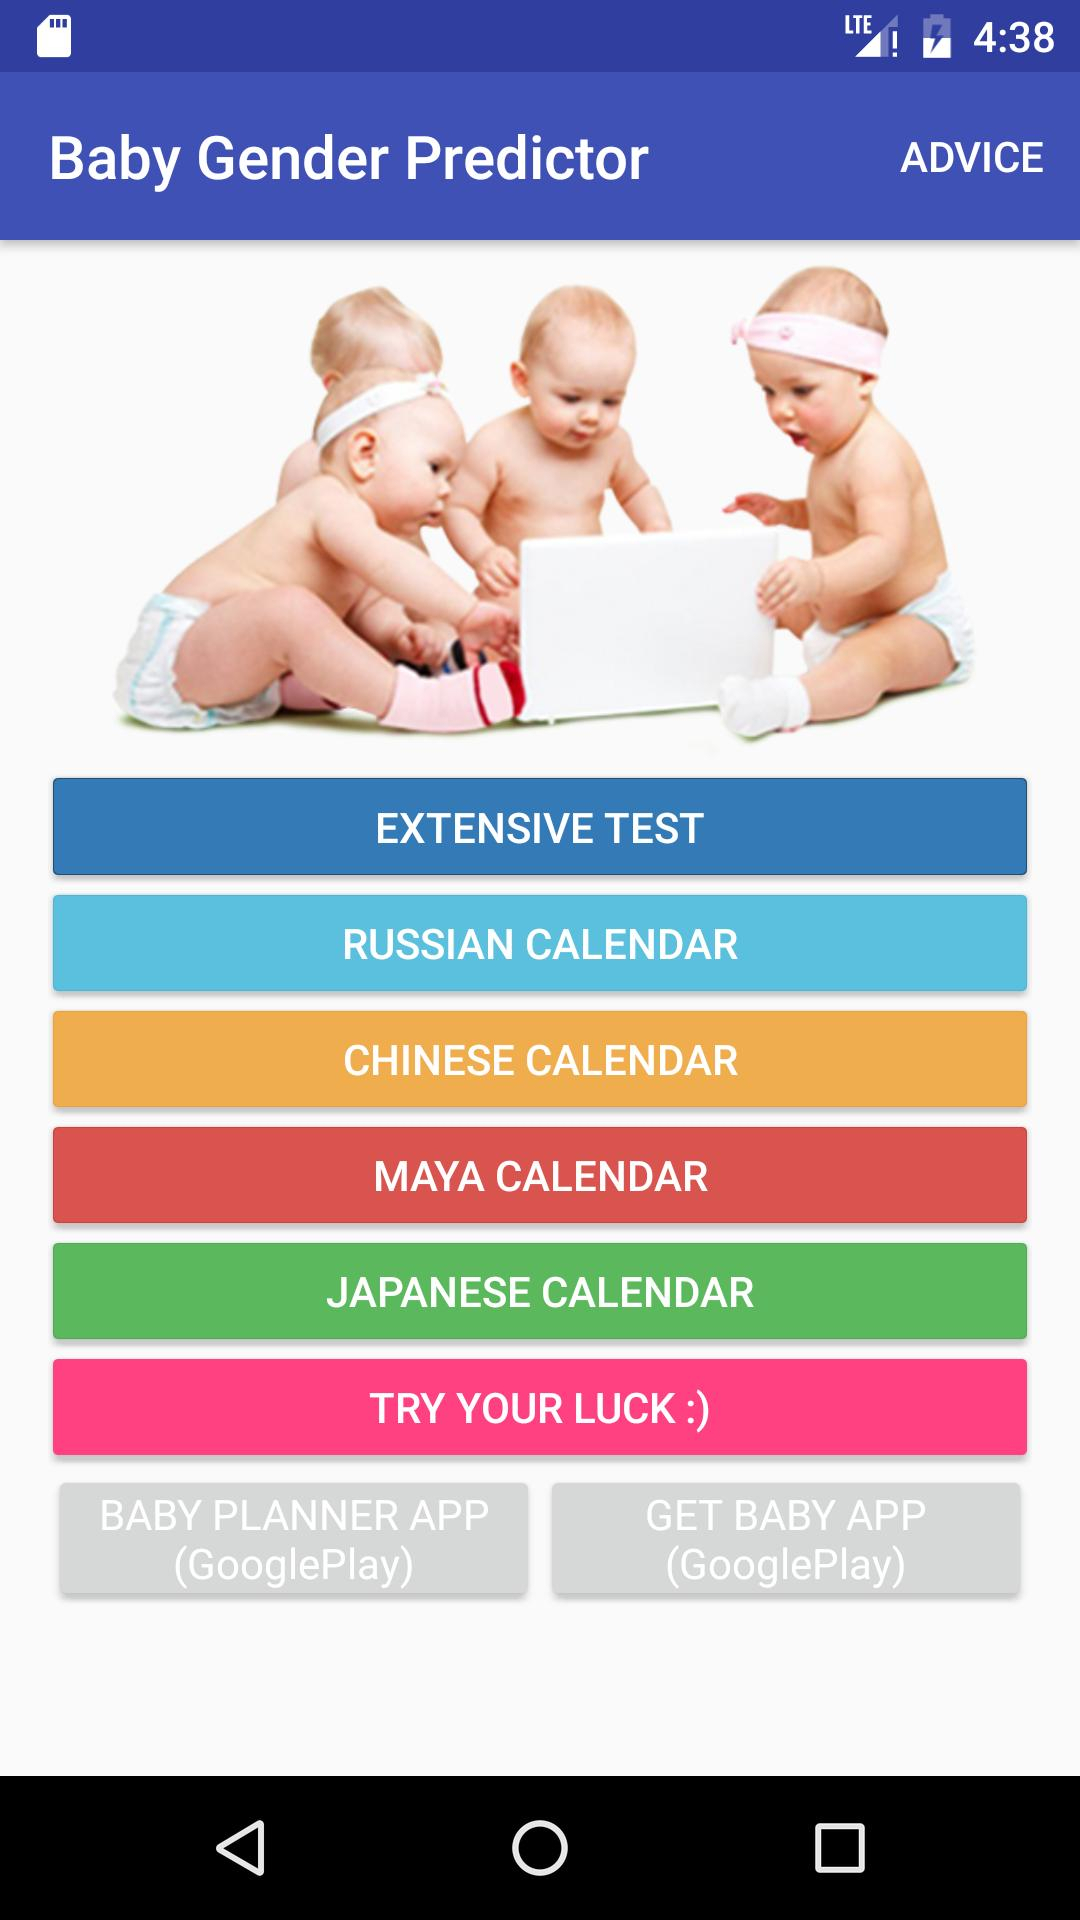 Baby Gender Predictor 2017 For Android  Apk Download intended for Mayan Calendar Gender Prediction